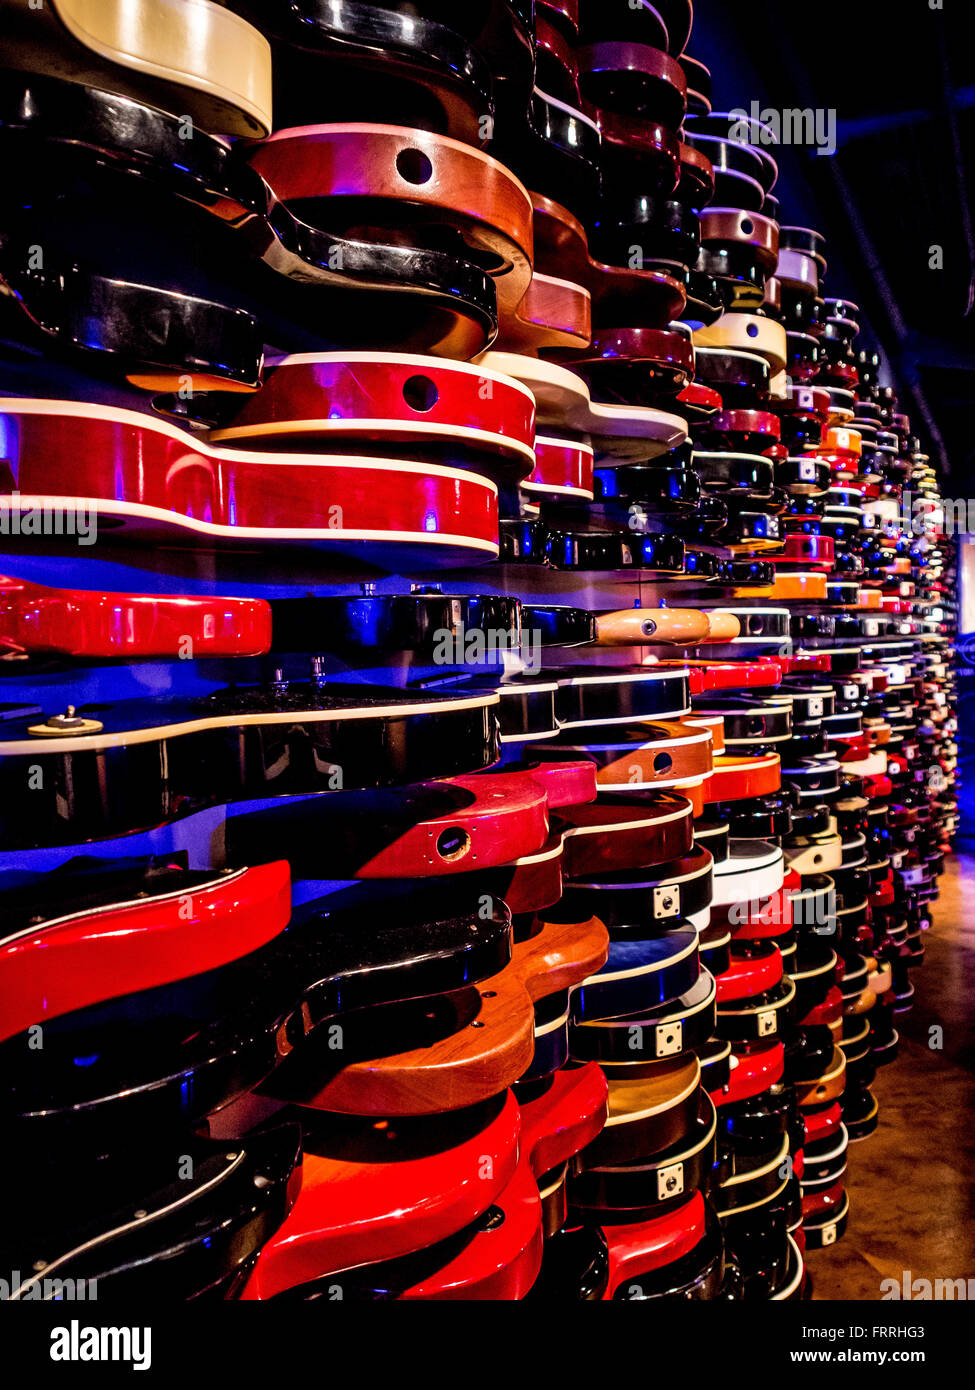 Hard Rock Cafe Guitar Wall, New York, USA Stock Photo